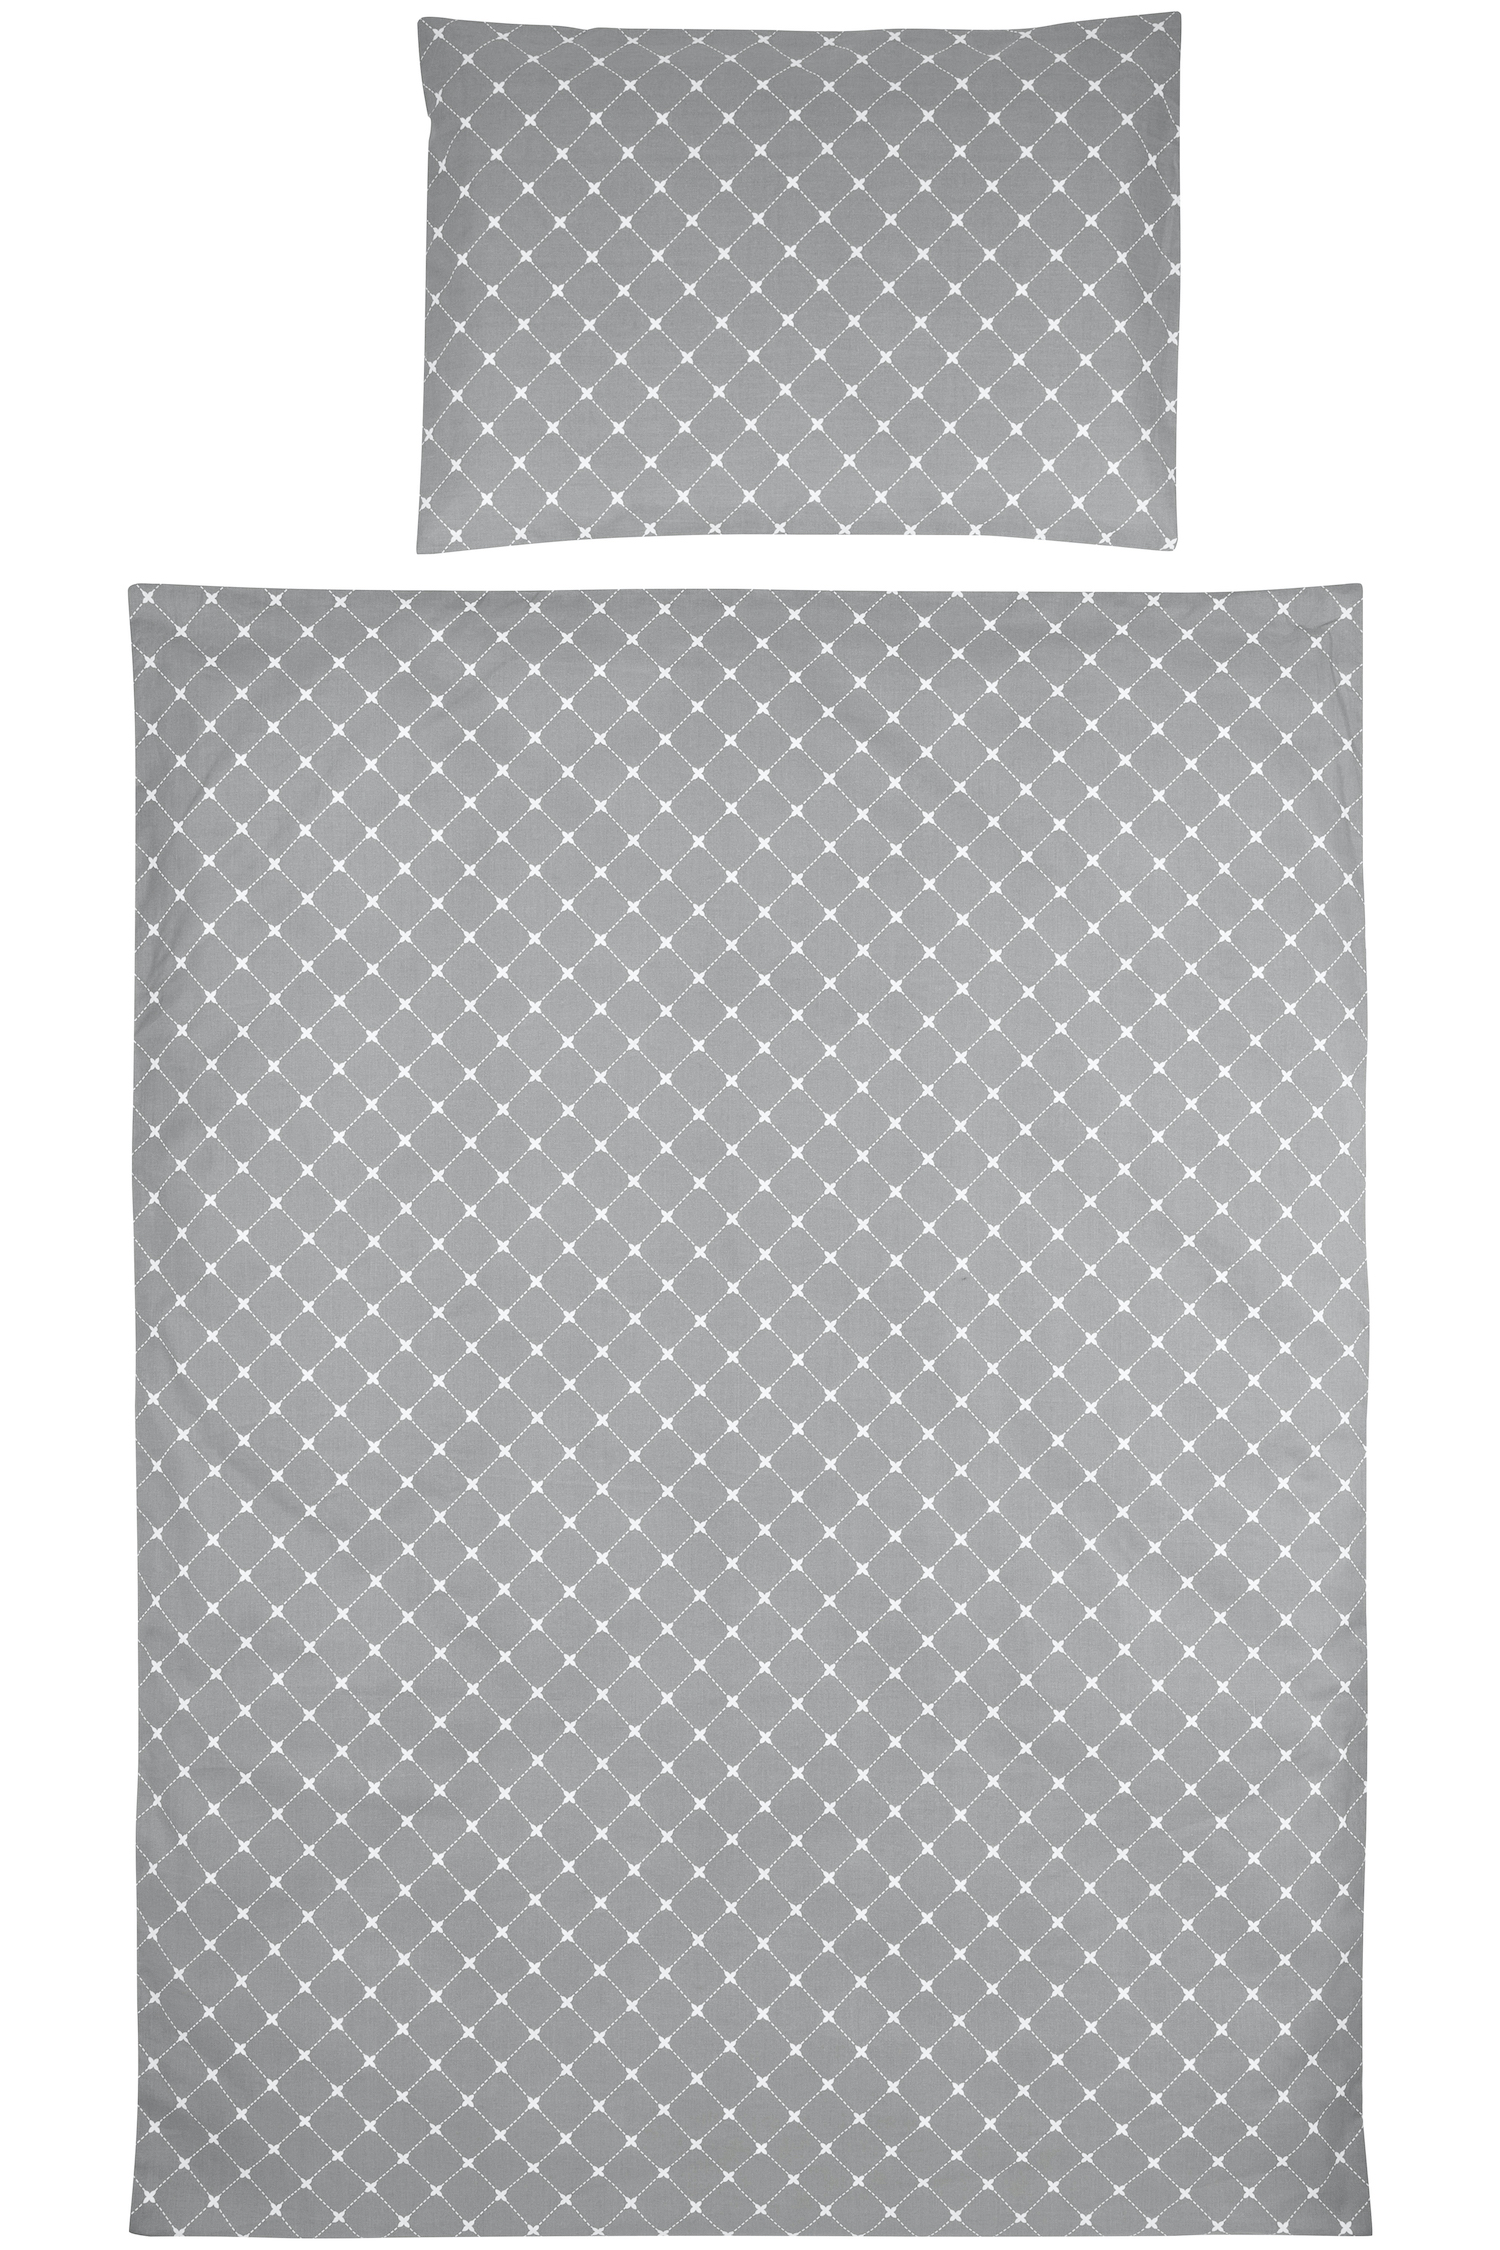 Meyco X Mrs. Keizer Duvet Cover + Pillowcase Louis - Grey - 120x150cm